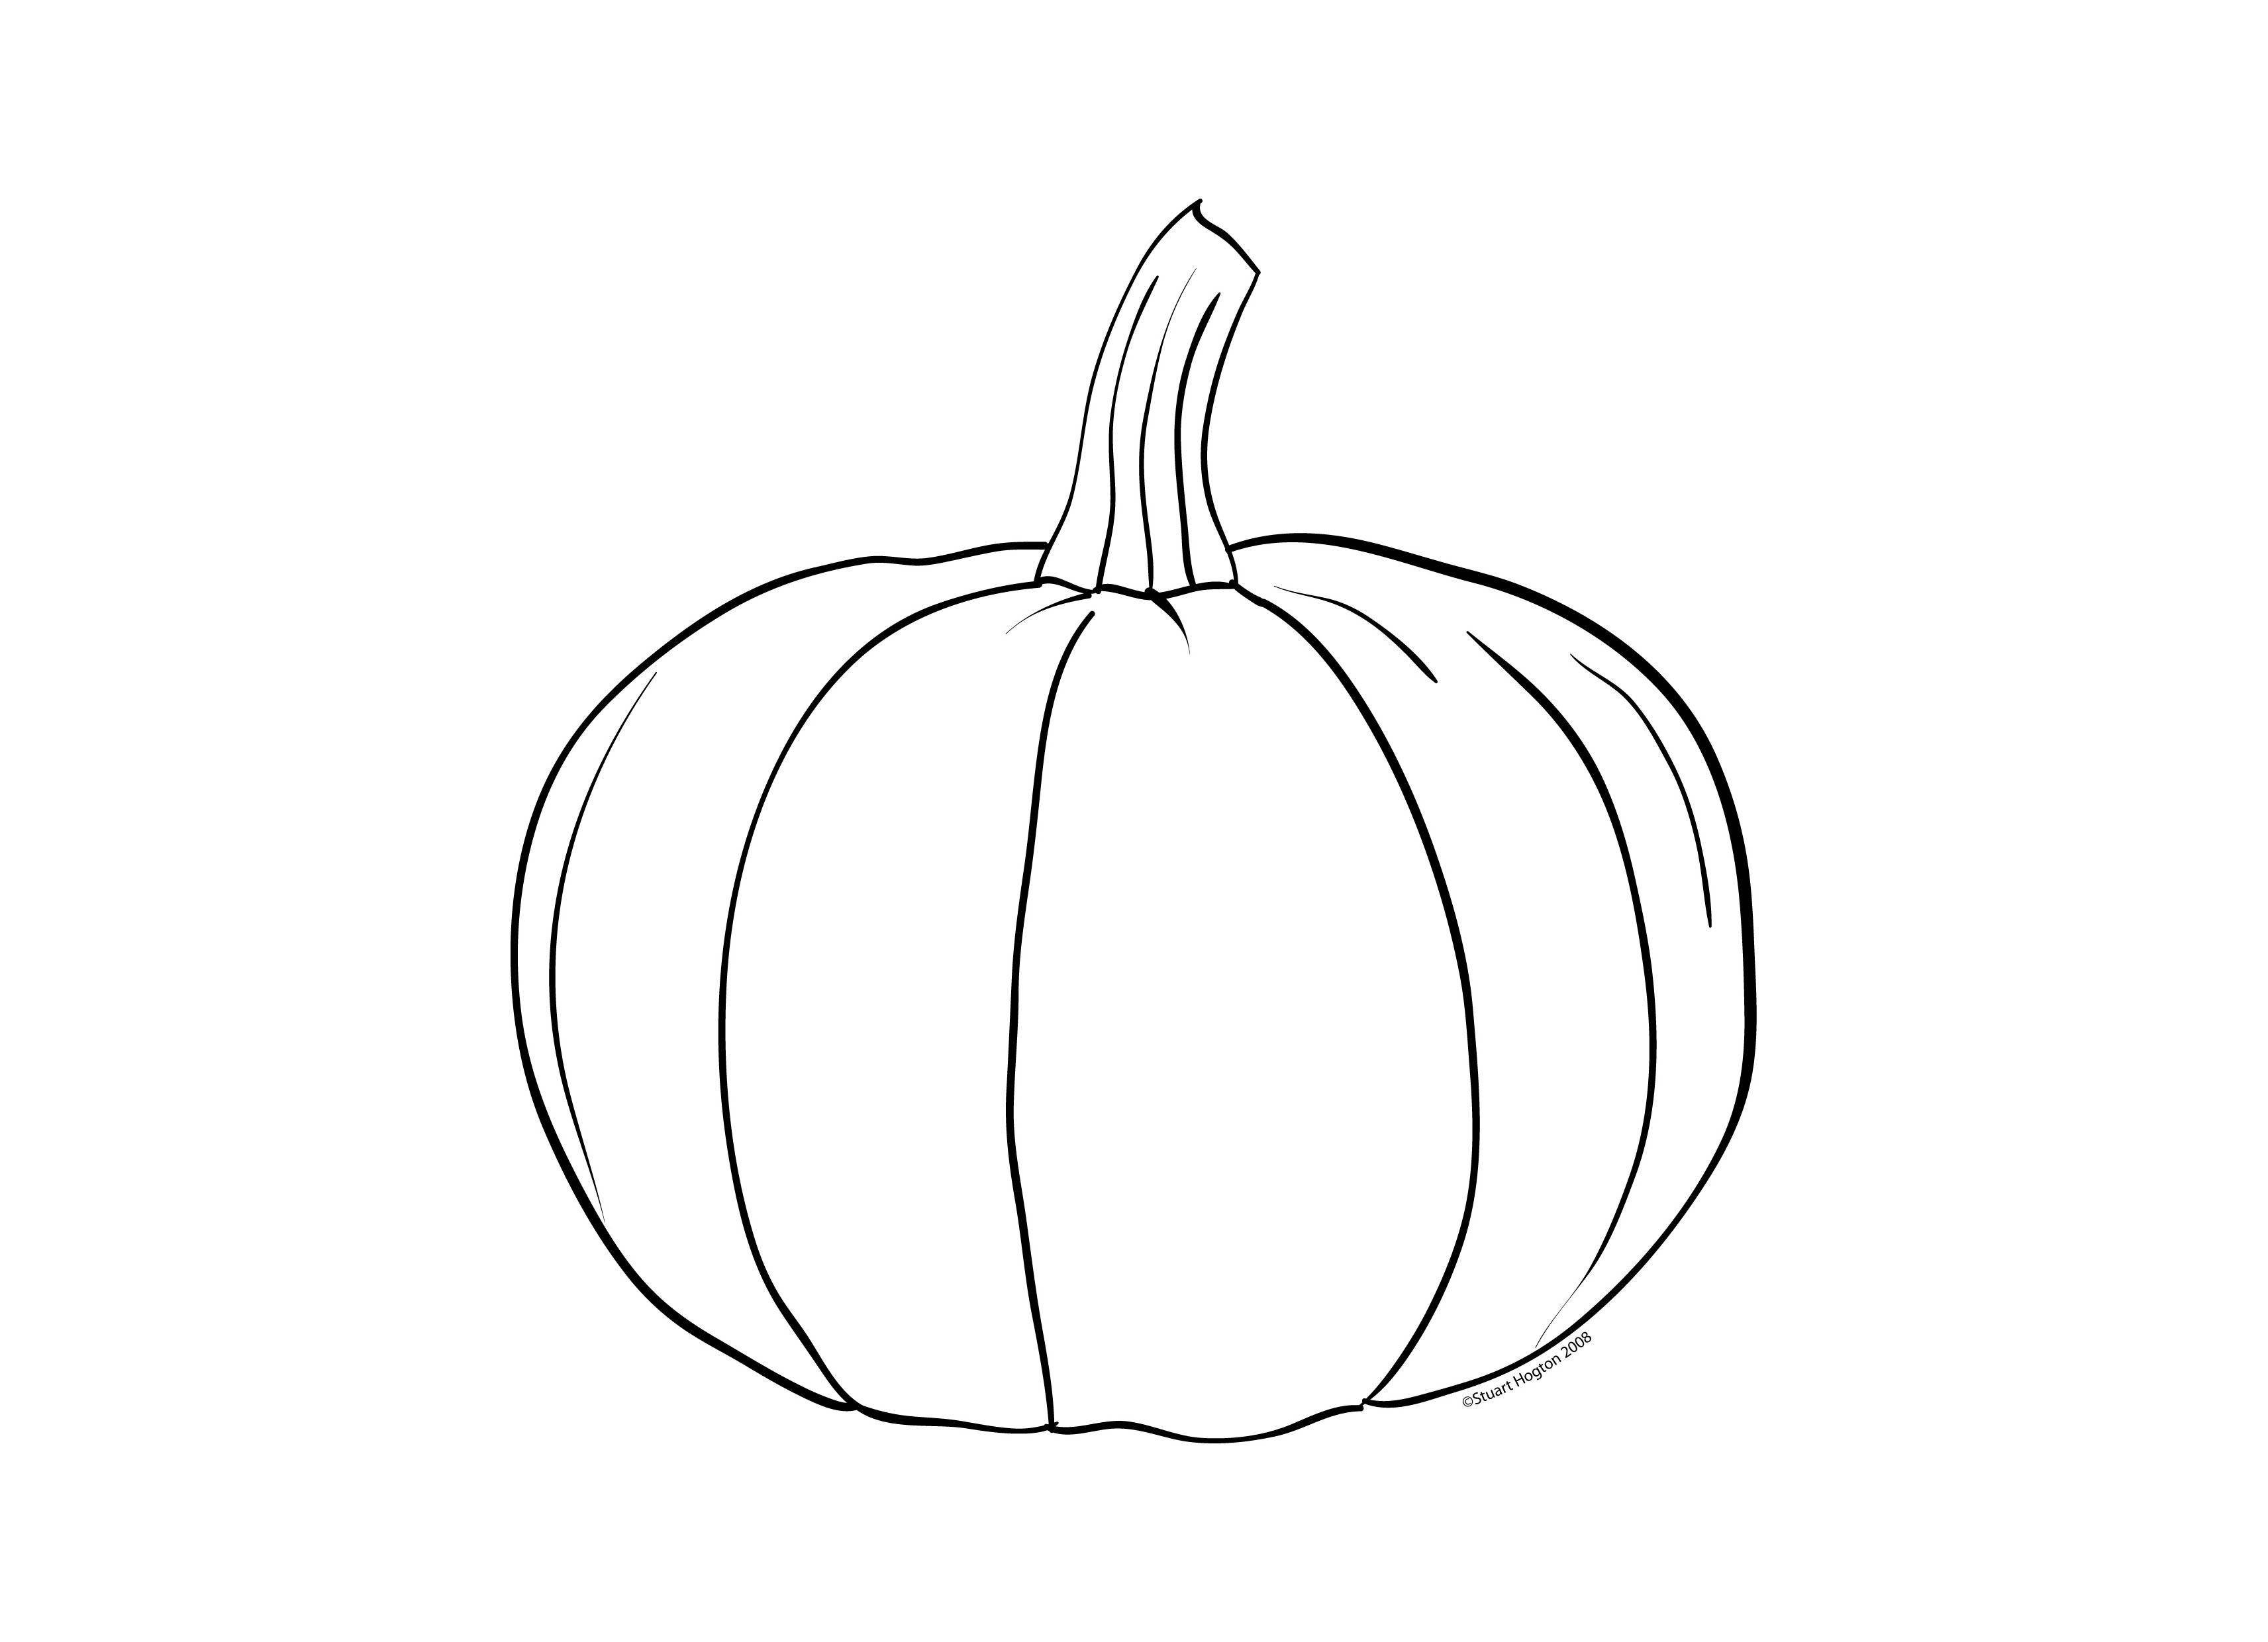 Coloring Pumpkin. Category vegetables. Tags:  pumpkin, contour, vegetables.